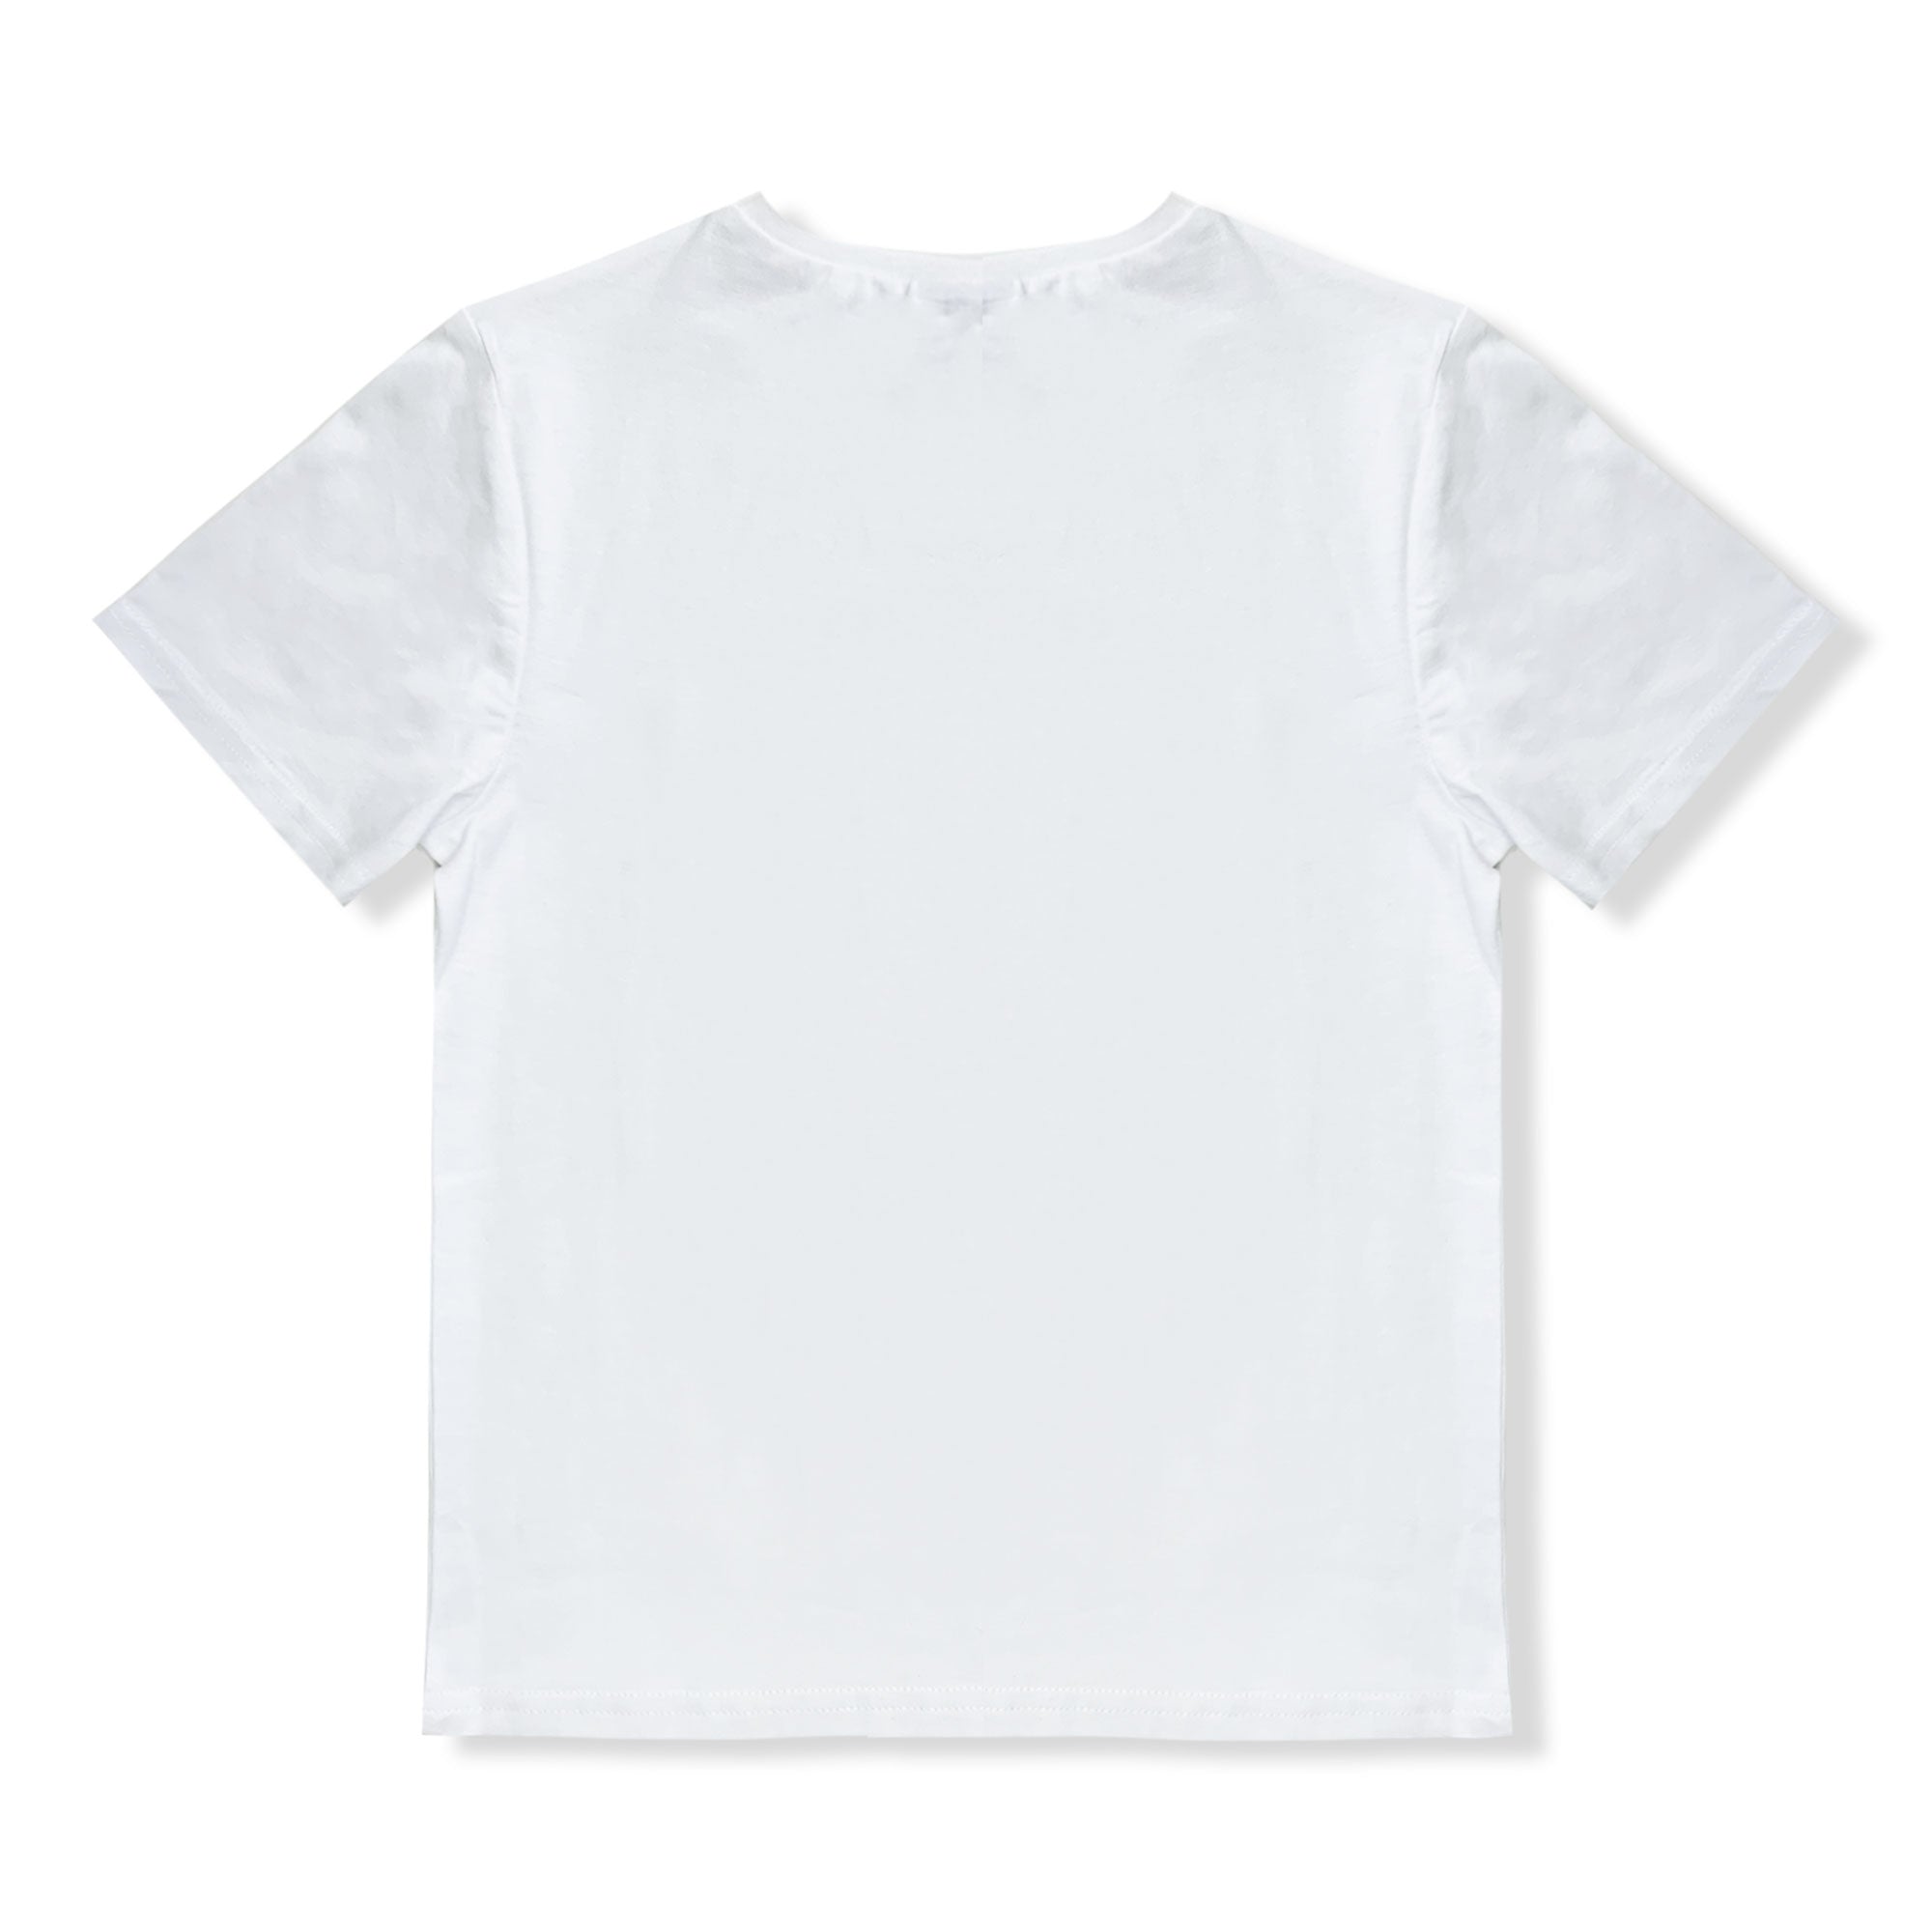 T-shirt Dragon Ball Z maglia bambino ragazzo mezze maniche in cotone Goku 6188